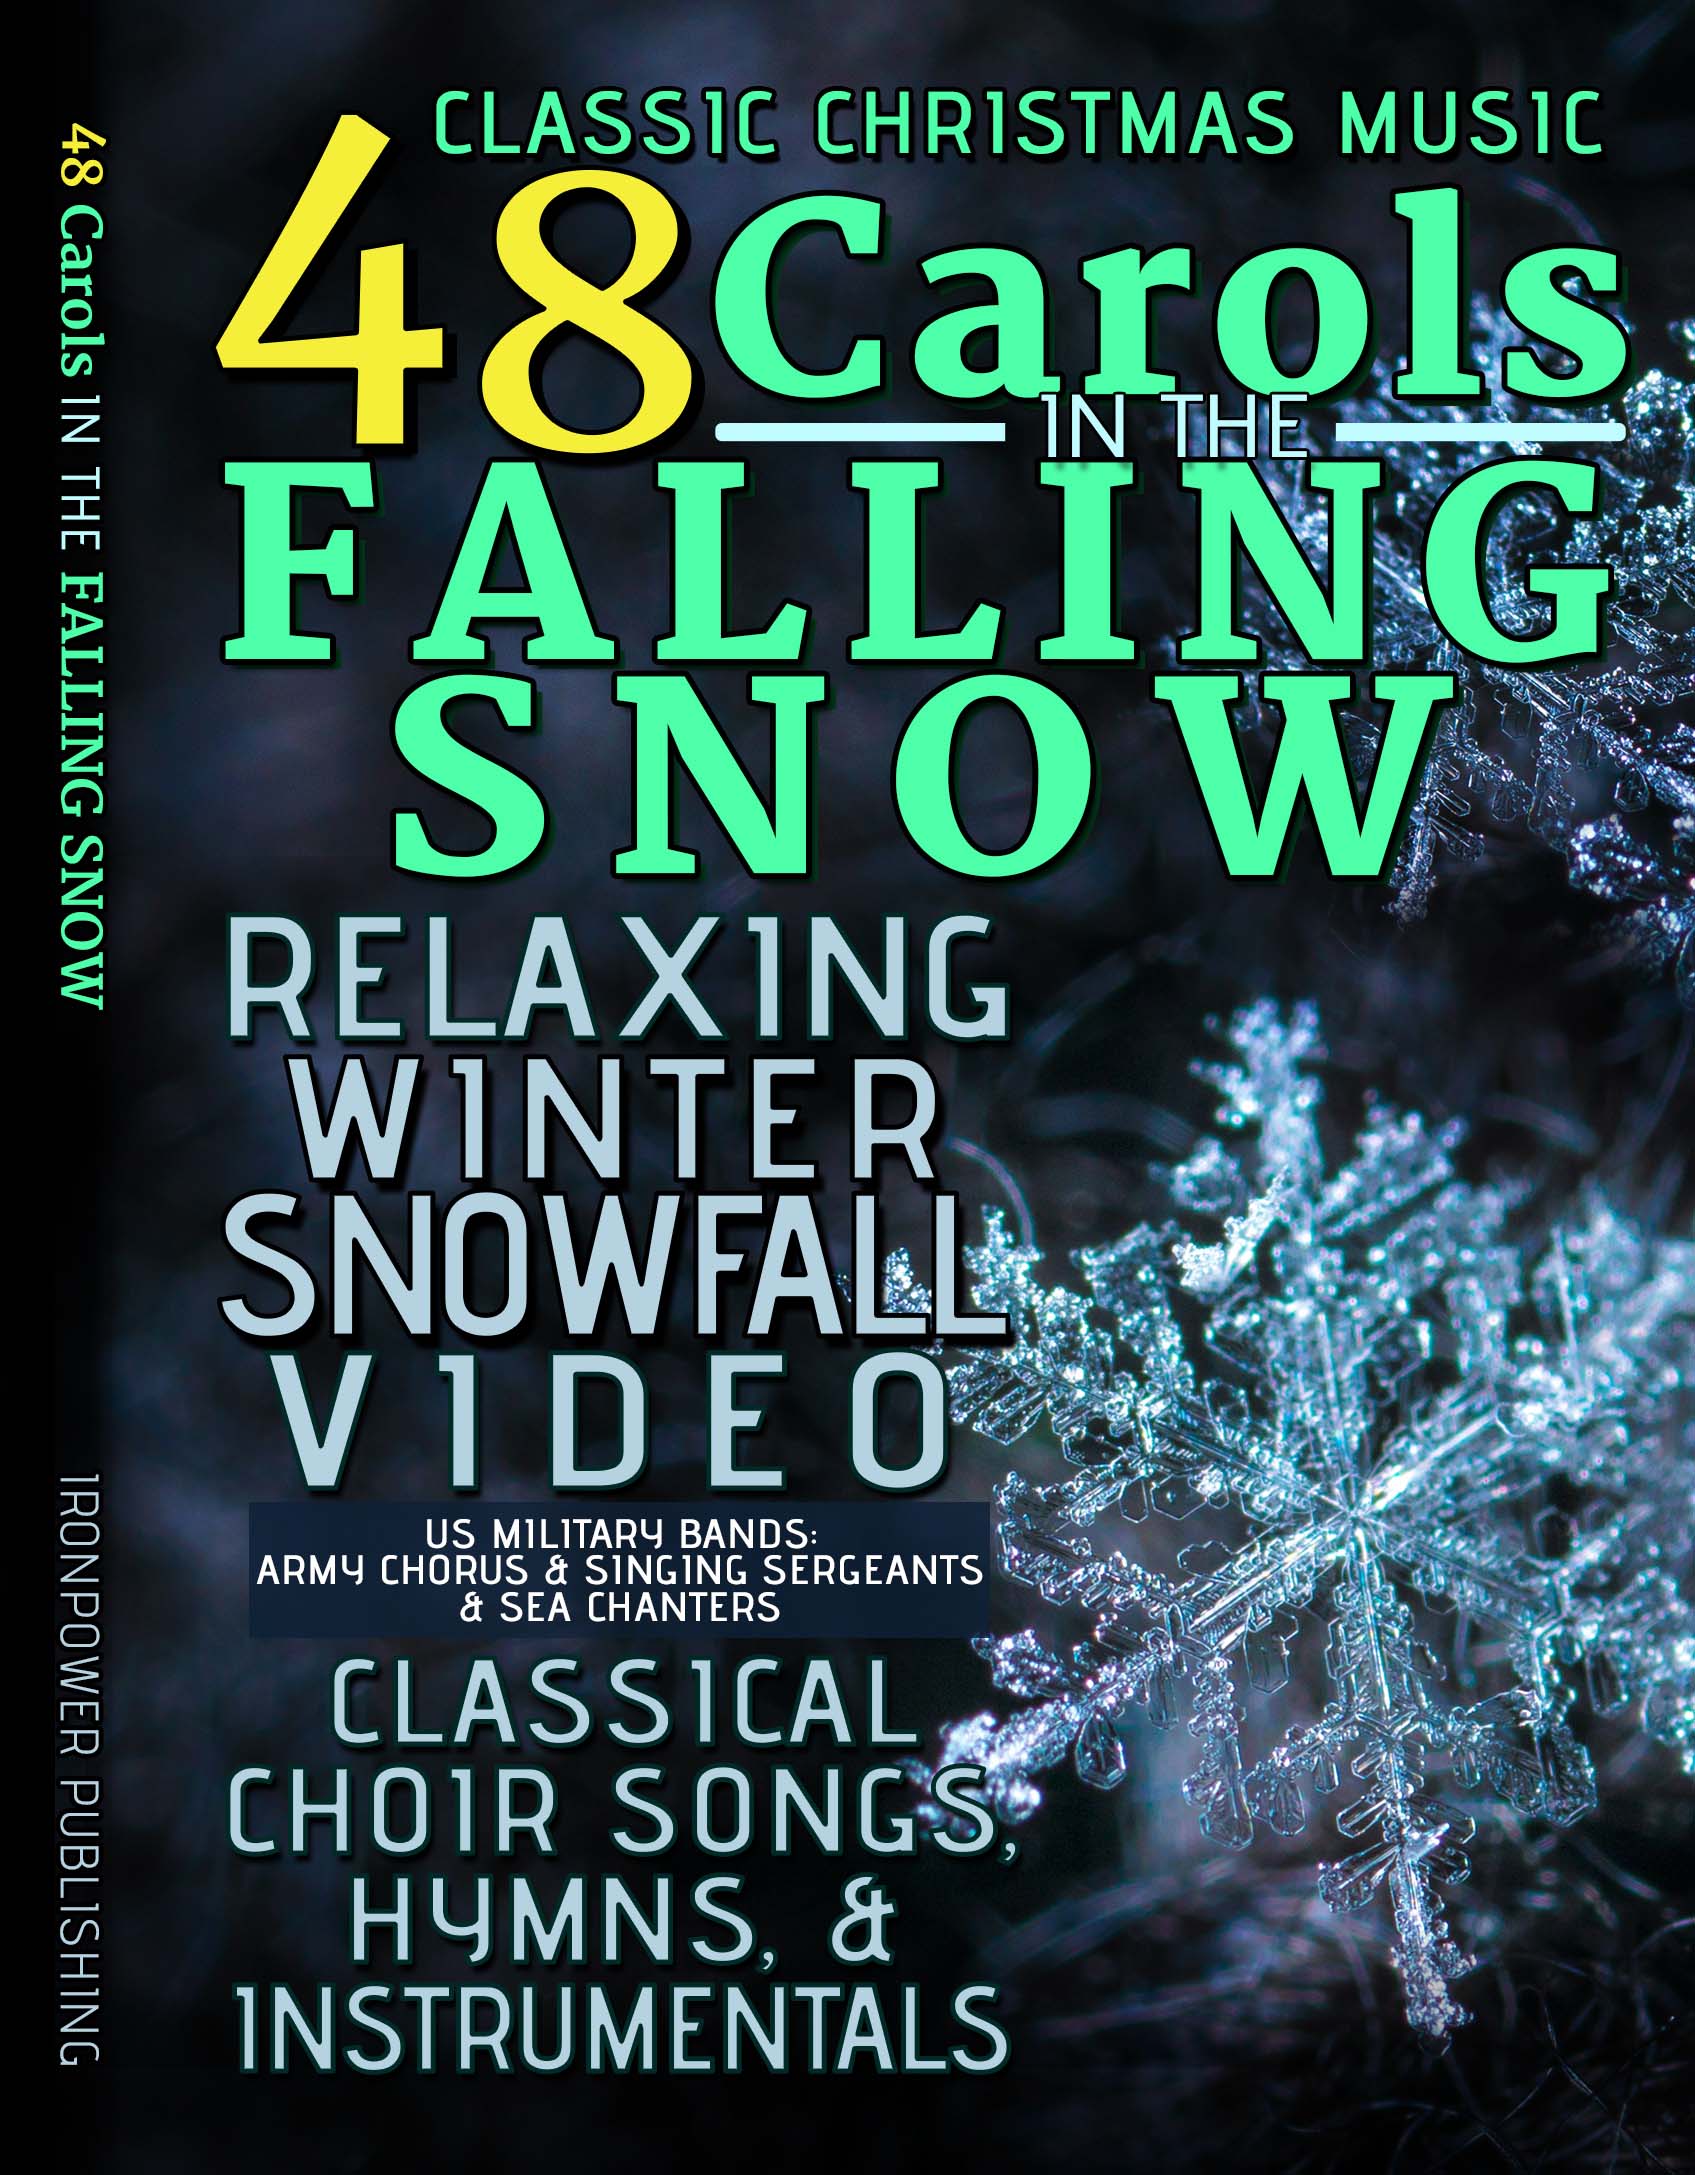 48 Carols in the Falling Snow